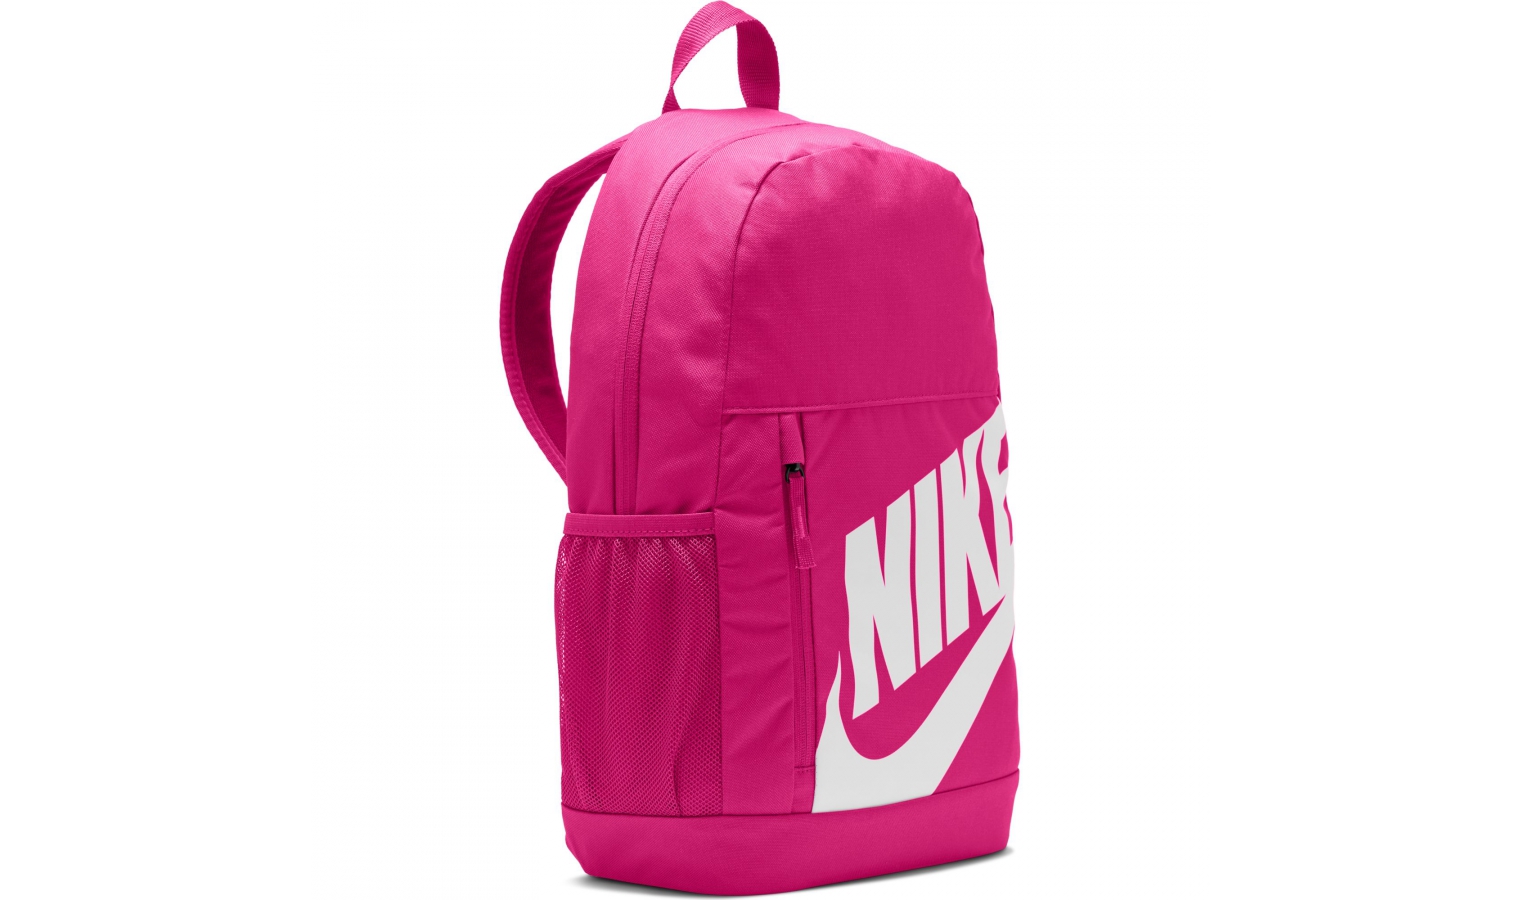 Perjudicial De hecho Supervisar Kids backpack Nike ELEMENTAL pink | AD Sport.store